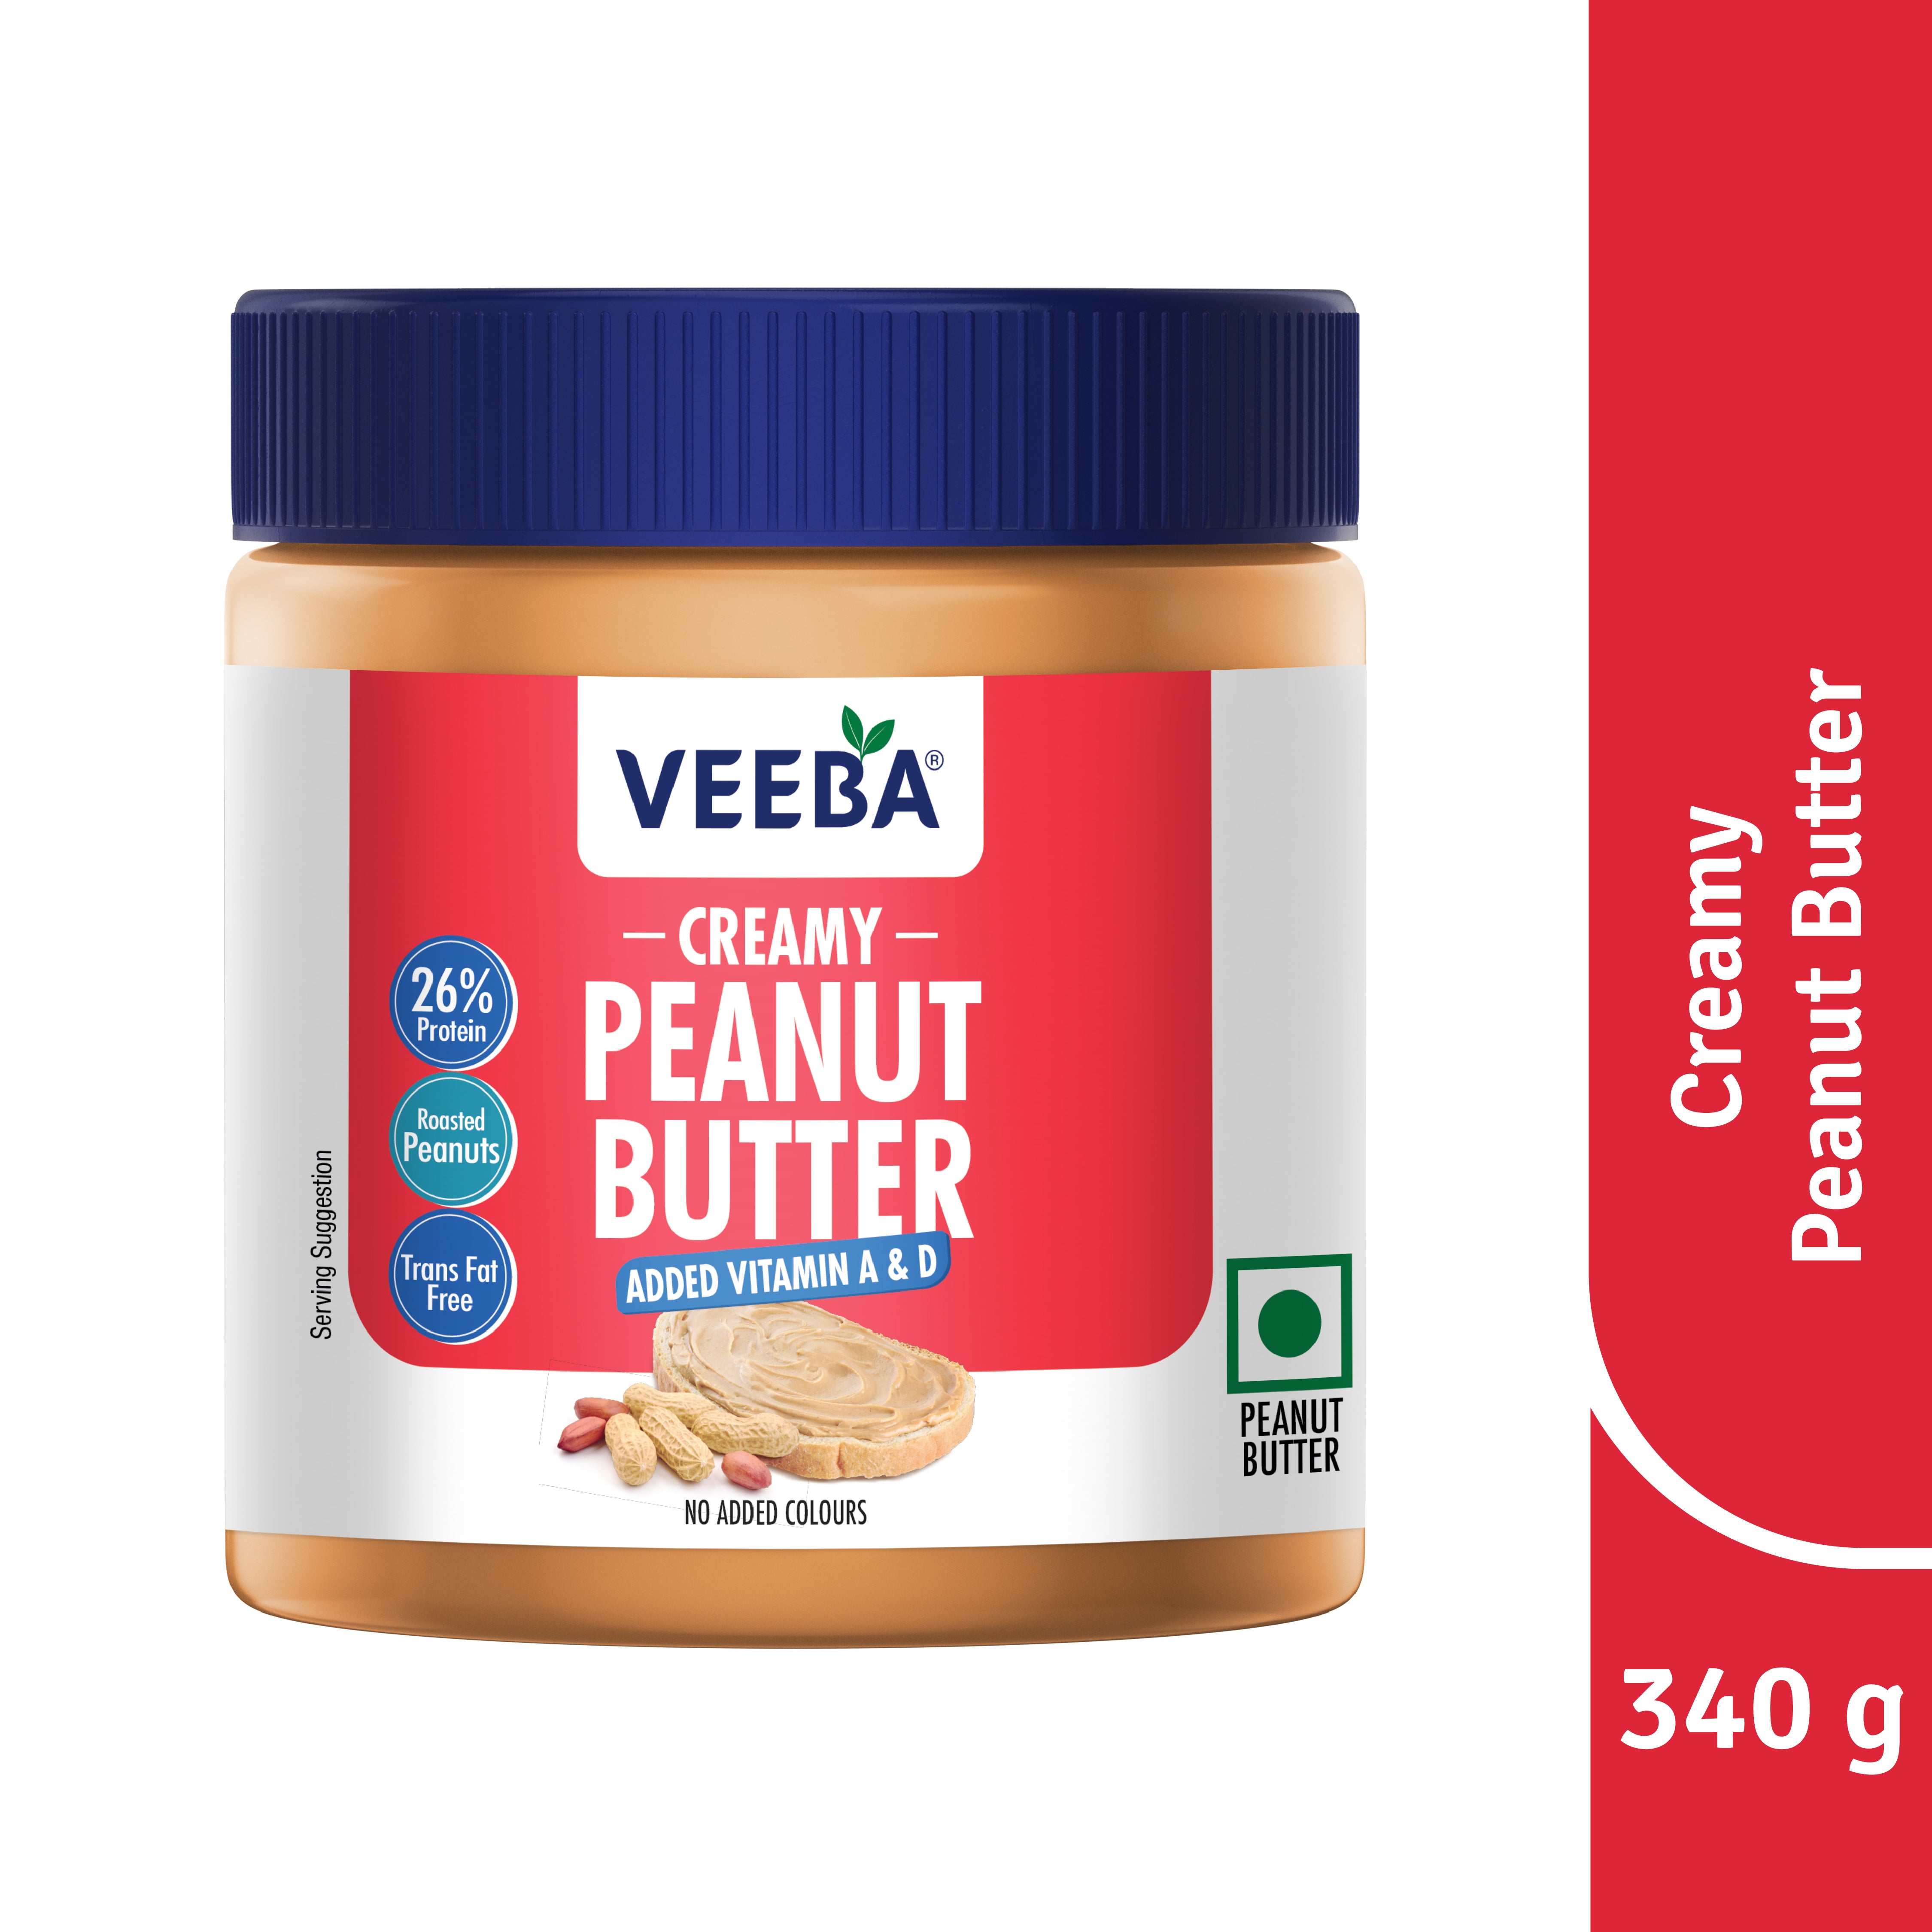 Creamy Peanut Butter added Vitamin A & D (340 g)